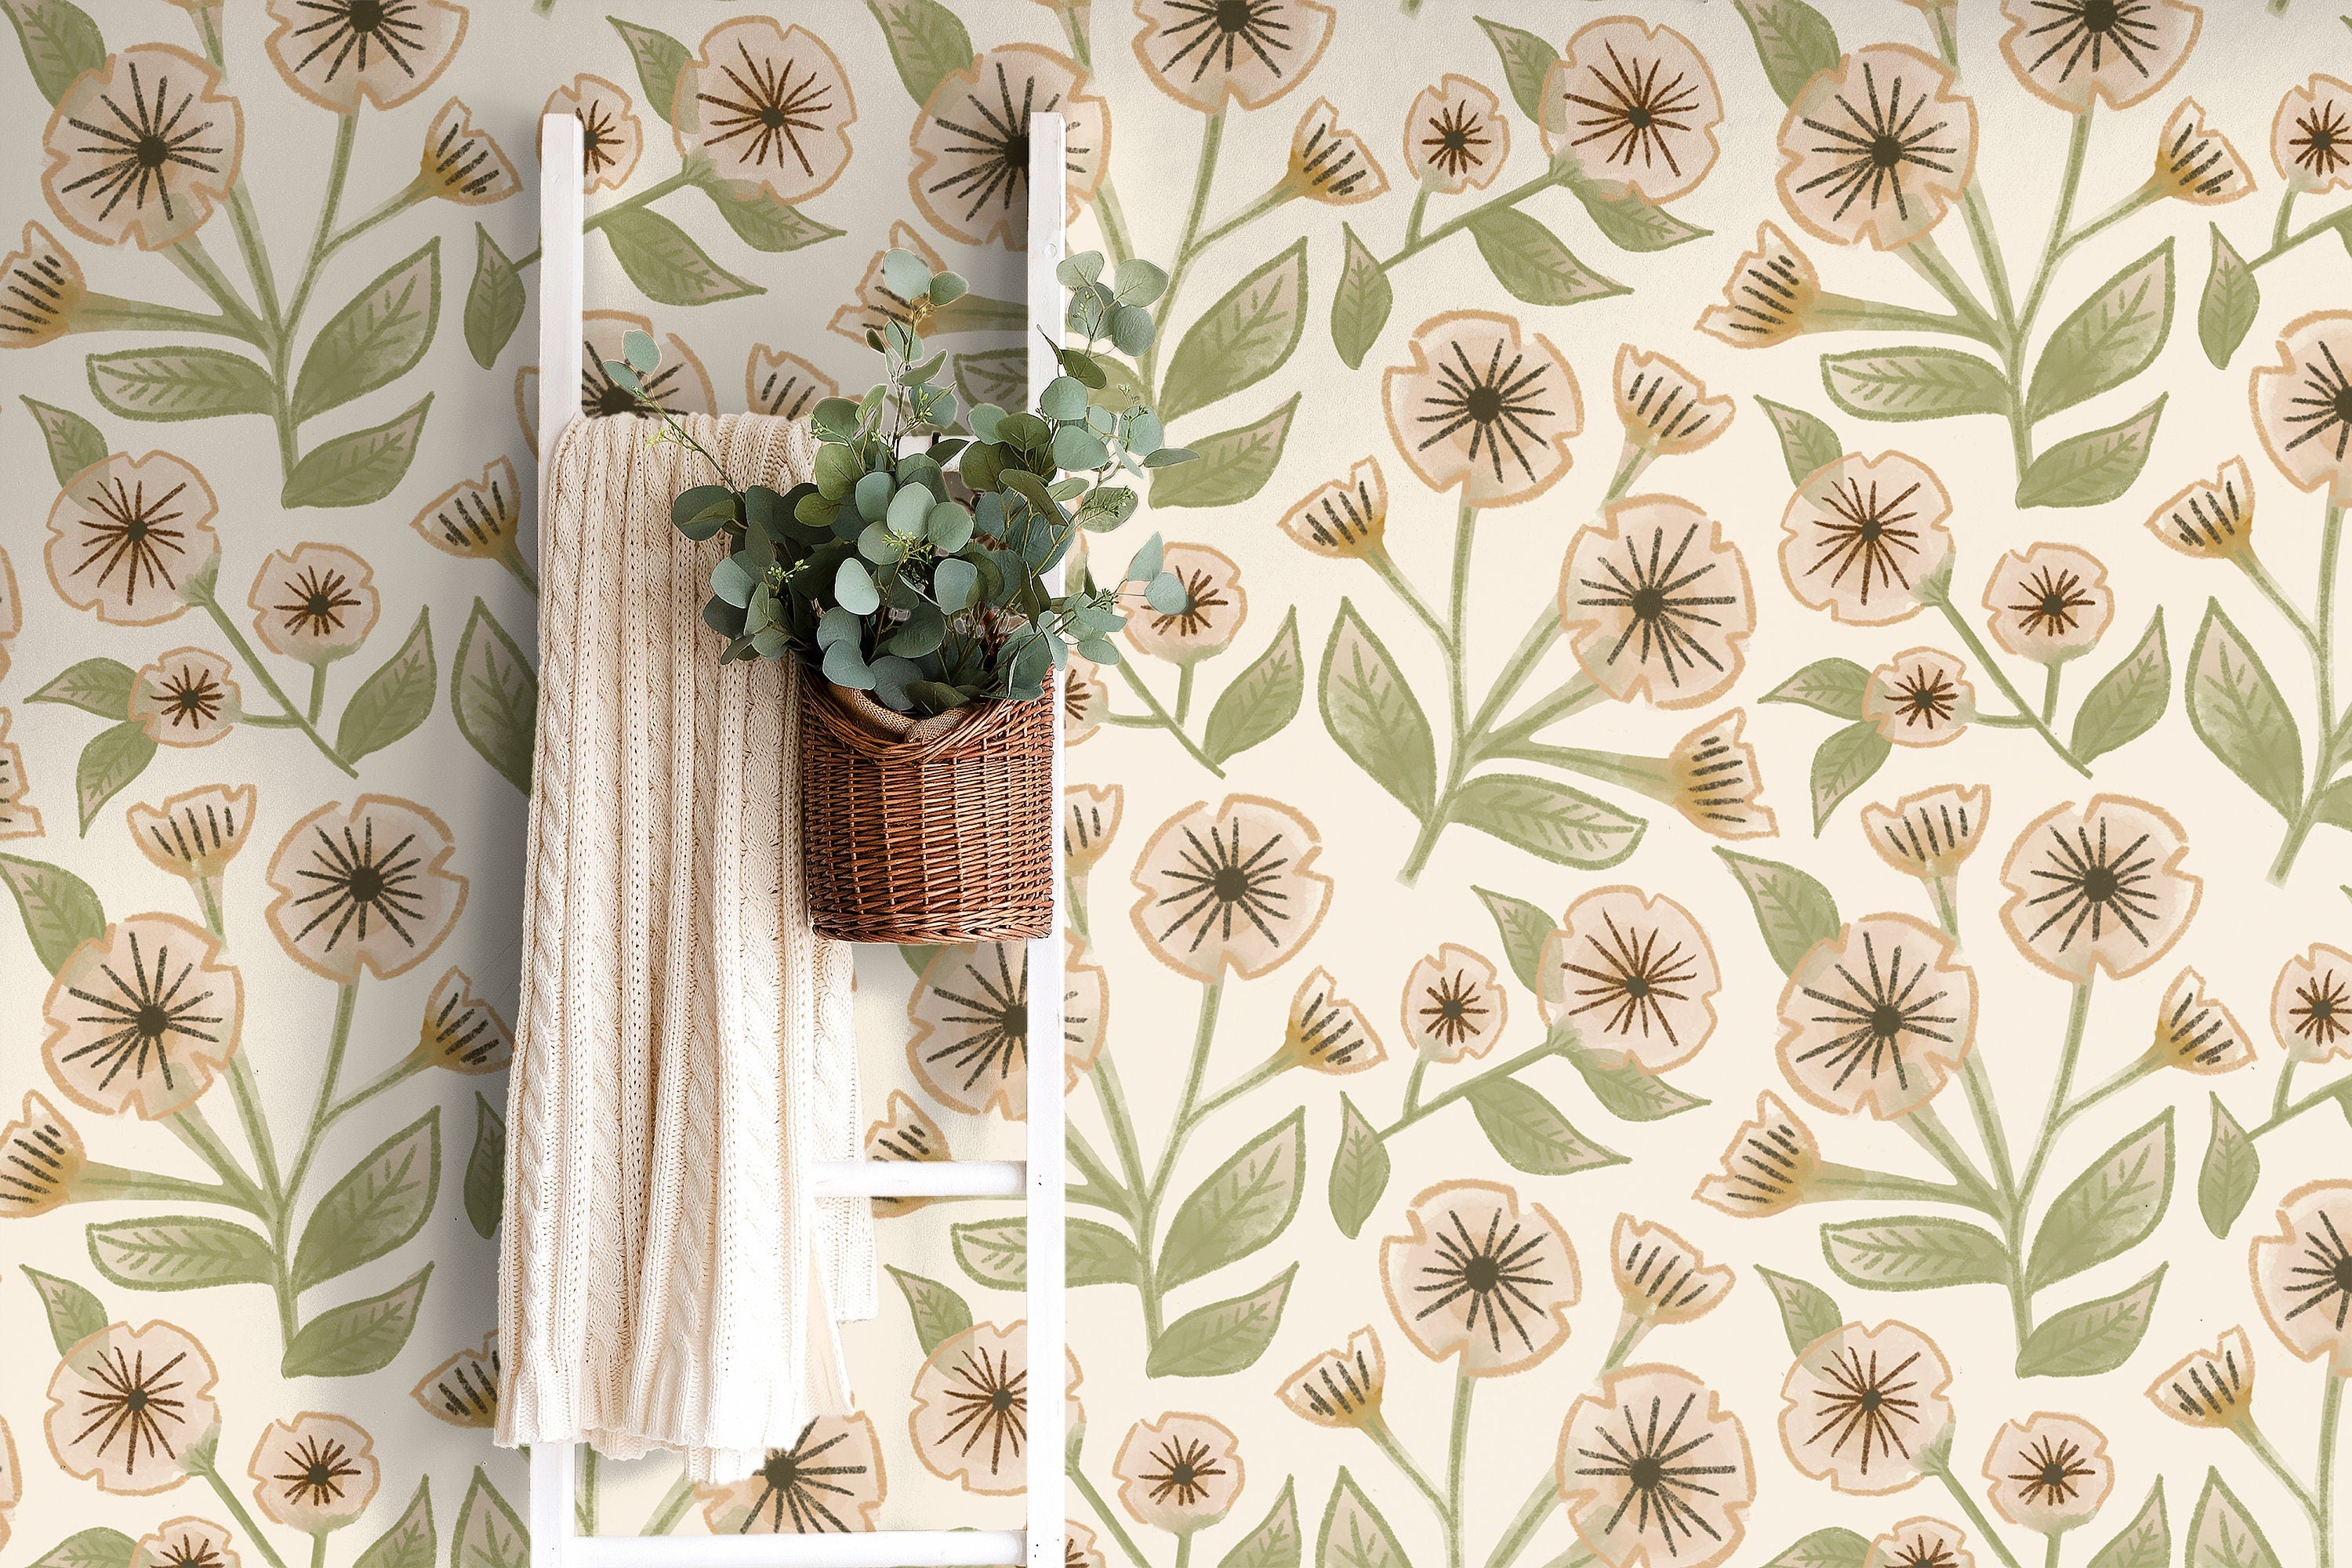 Farmhouse Floral Wallpaper | Removable Wallpaper | Peel And Stick Wallpaper | Adhesive Wallpaper | Wall Paper Peel Stick Wall Mural 3631 - JamesAndColors